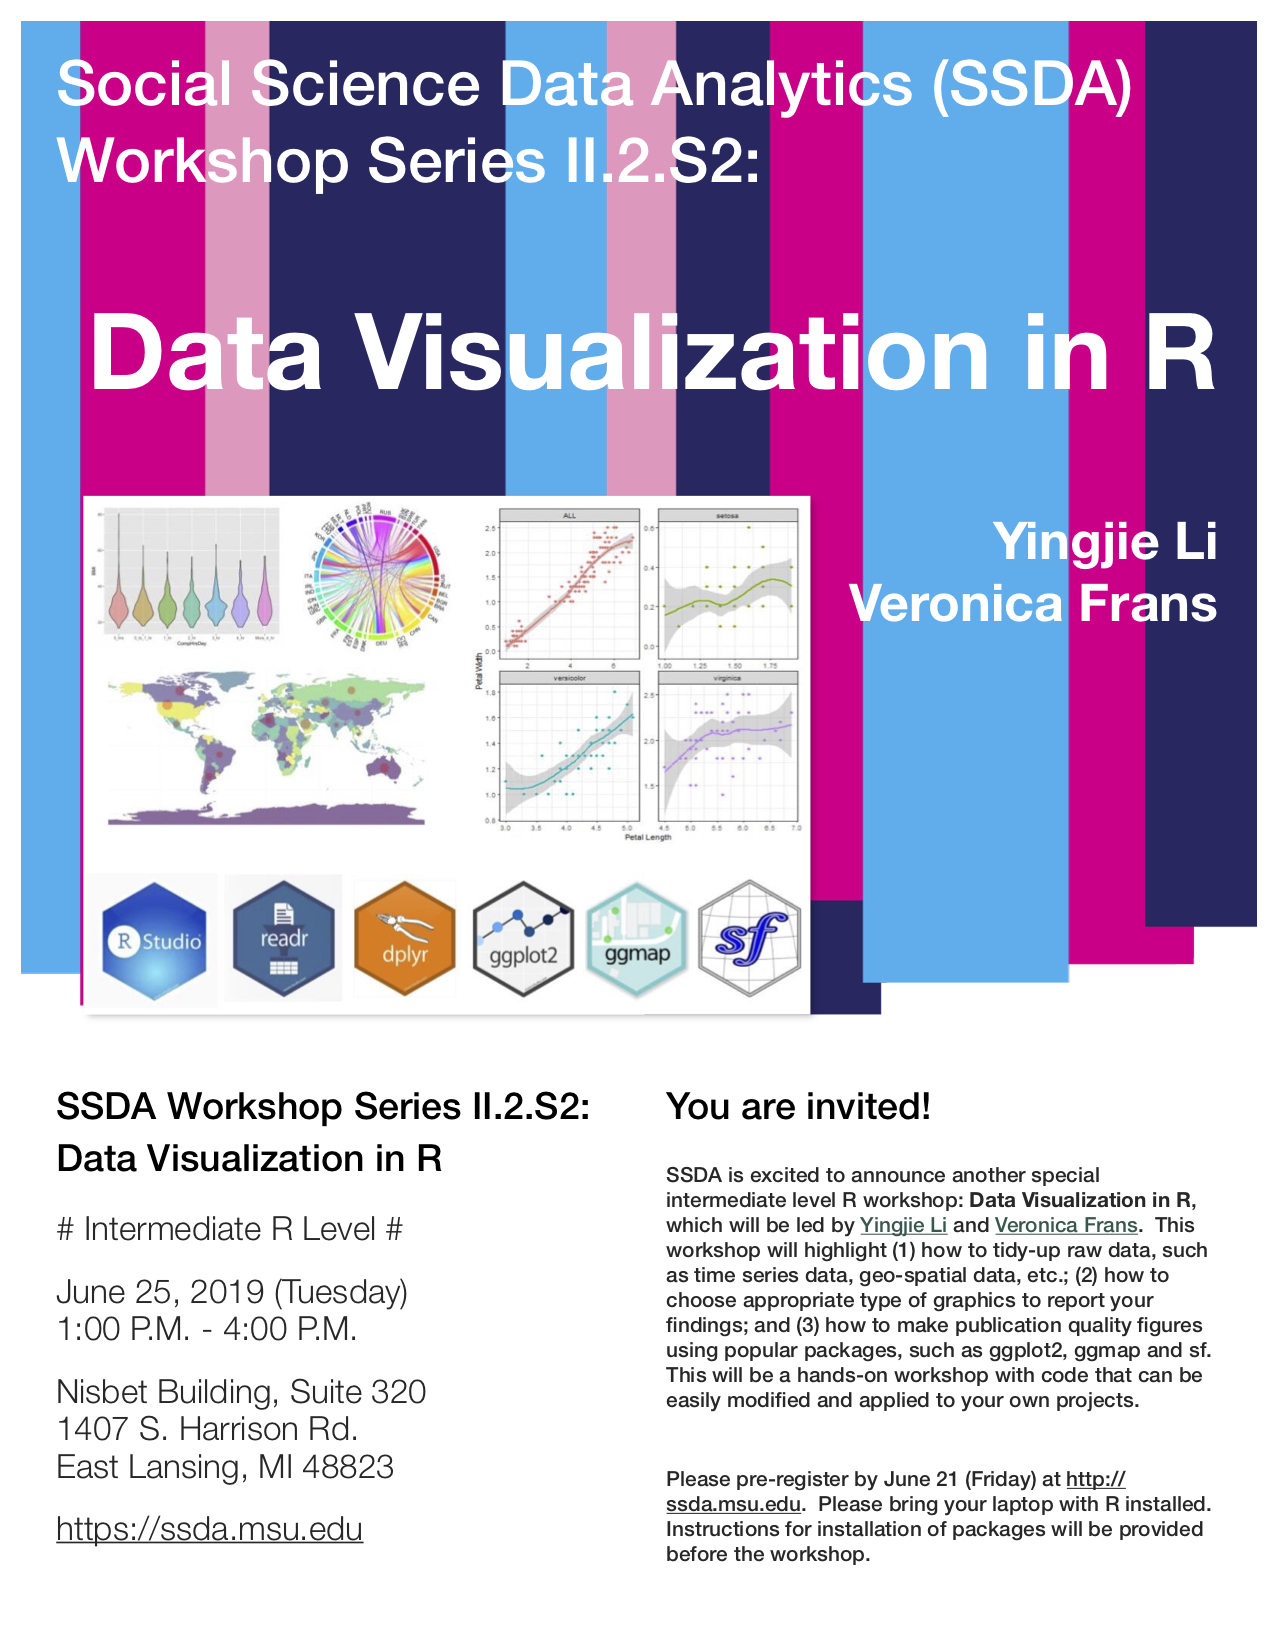 SSDA Workshop Flyer - Data Visualization in R